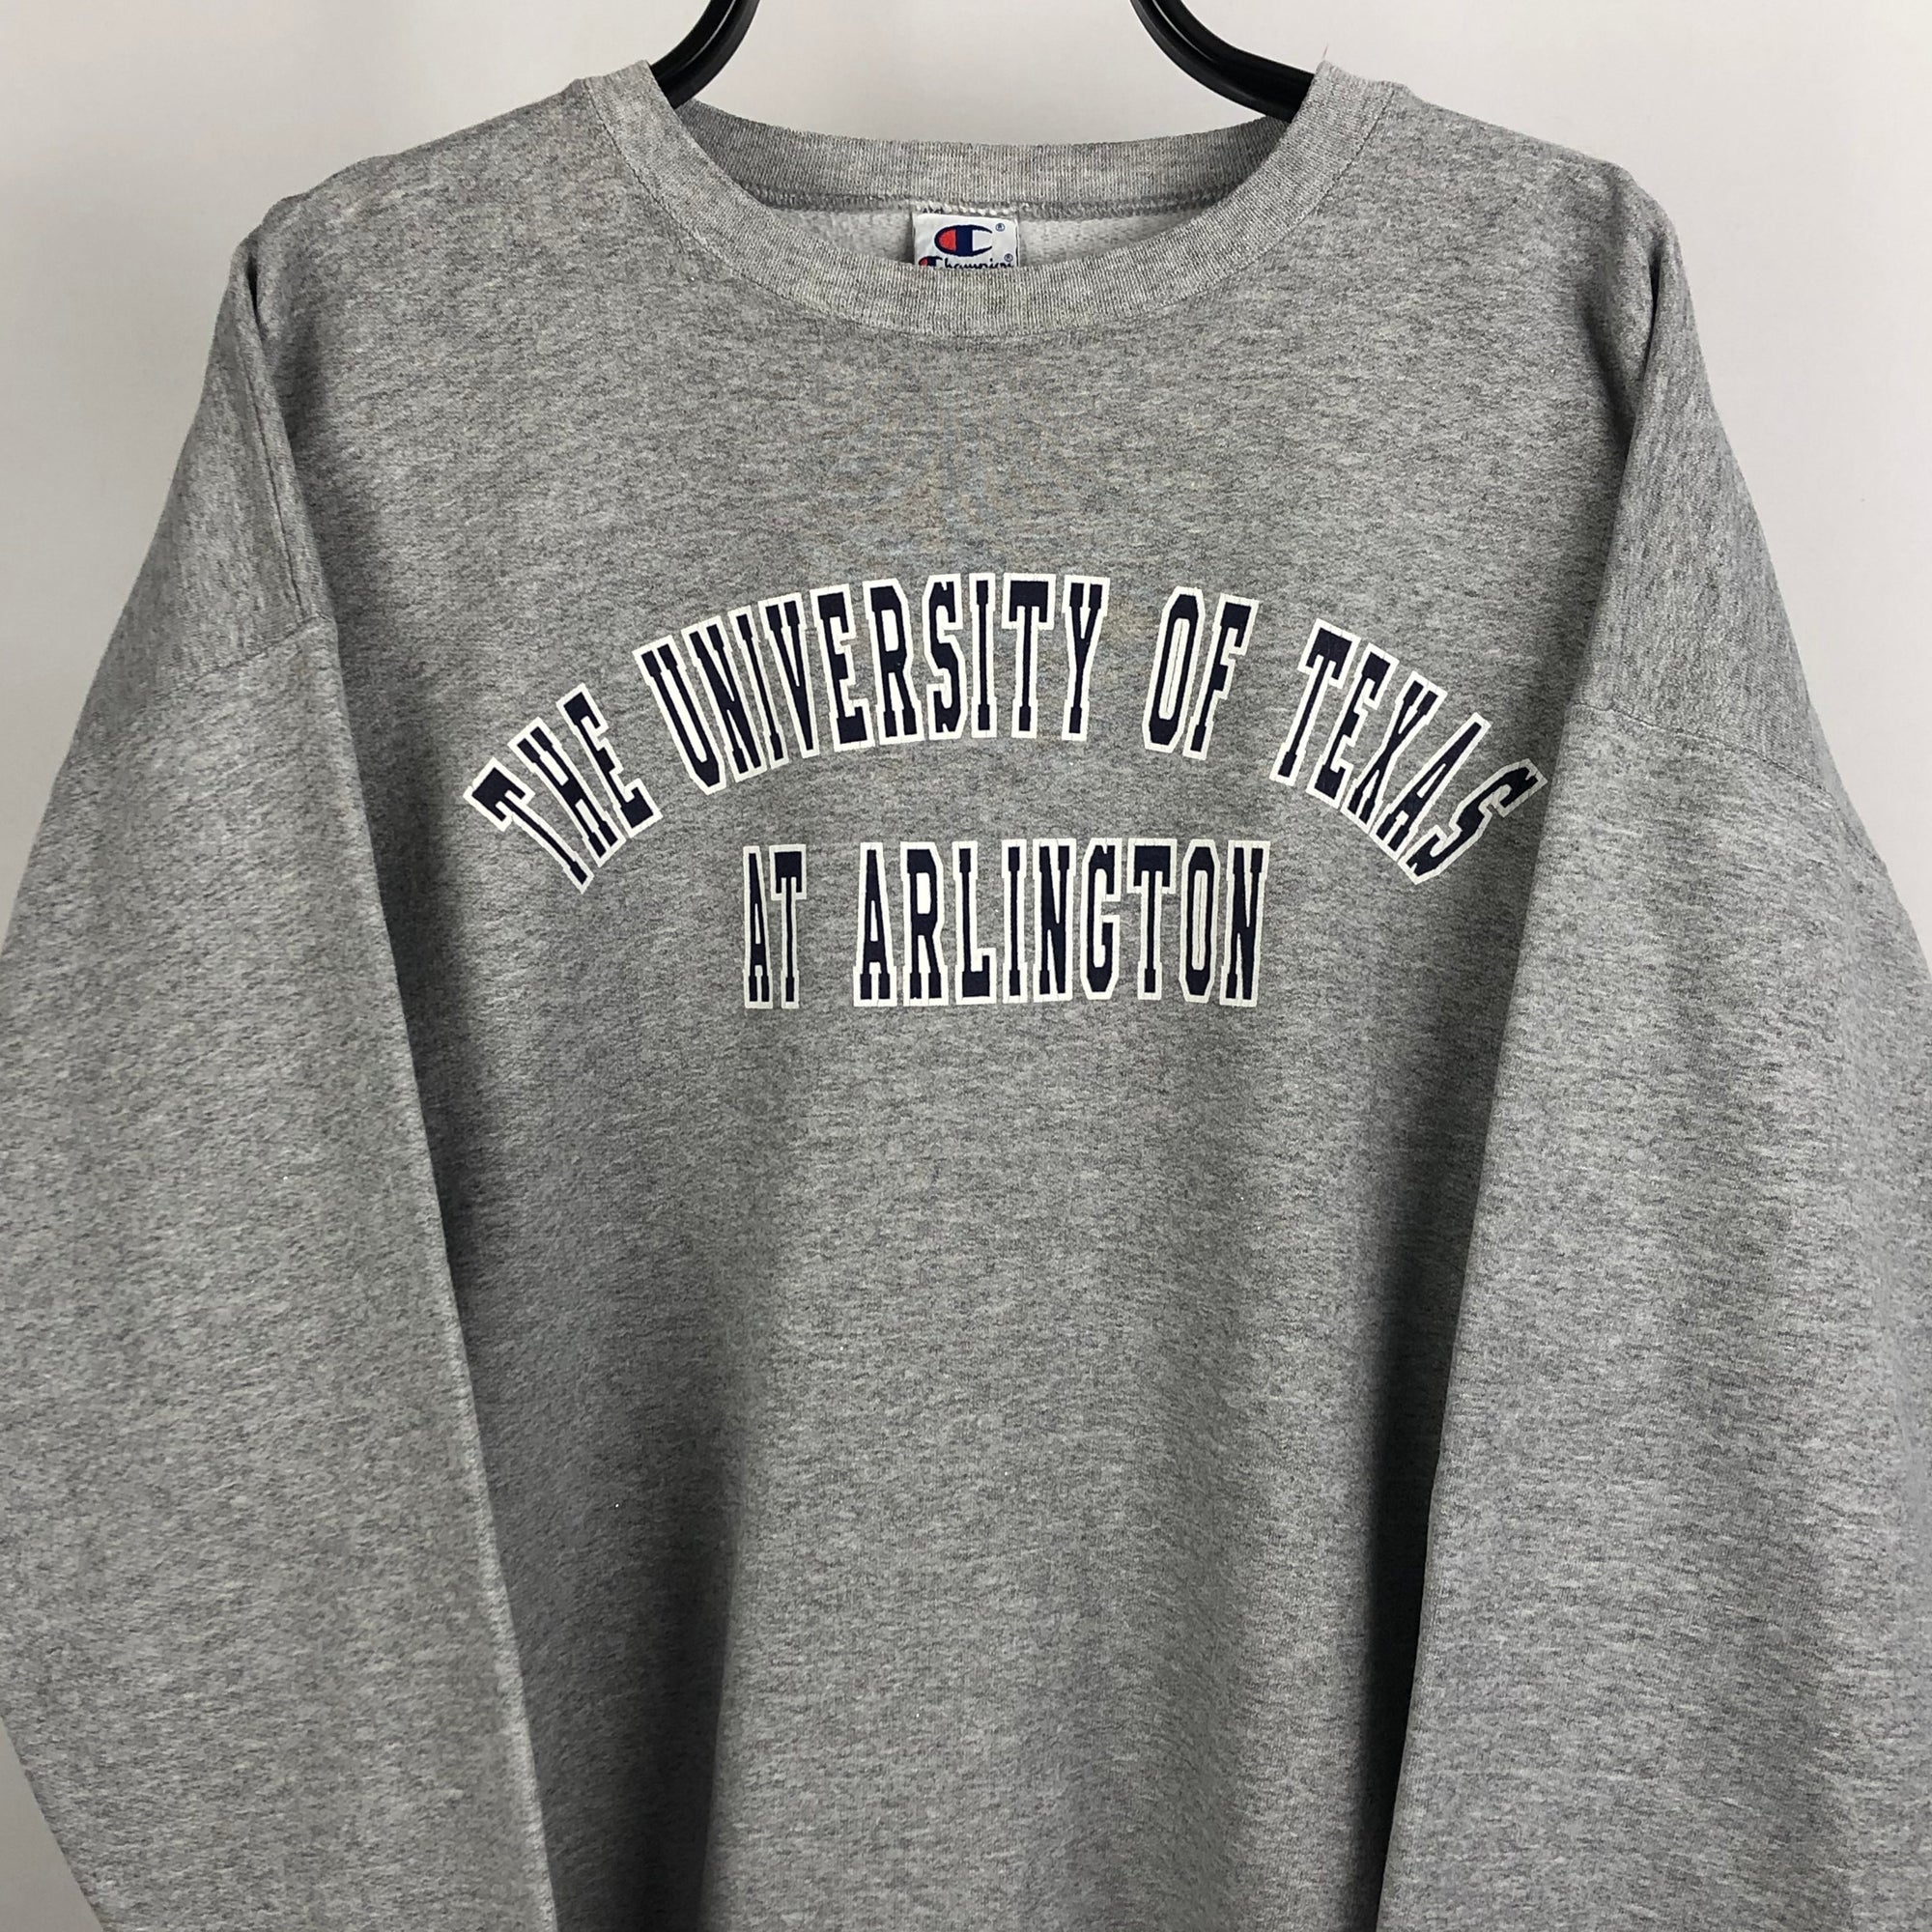 Vintage Champion Uni of Texas Sweatshirt - Men's Large/Women's XL